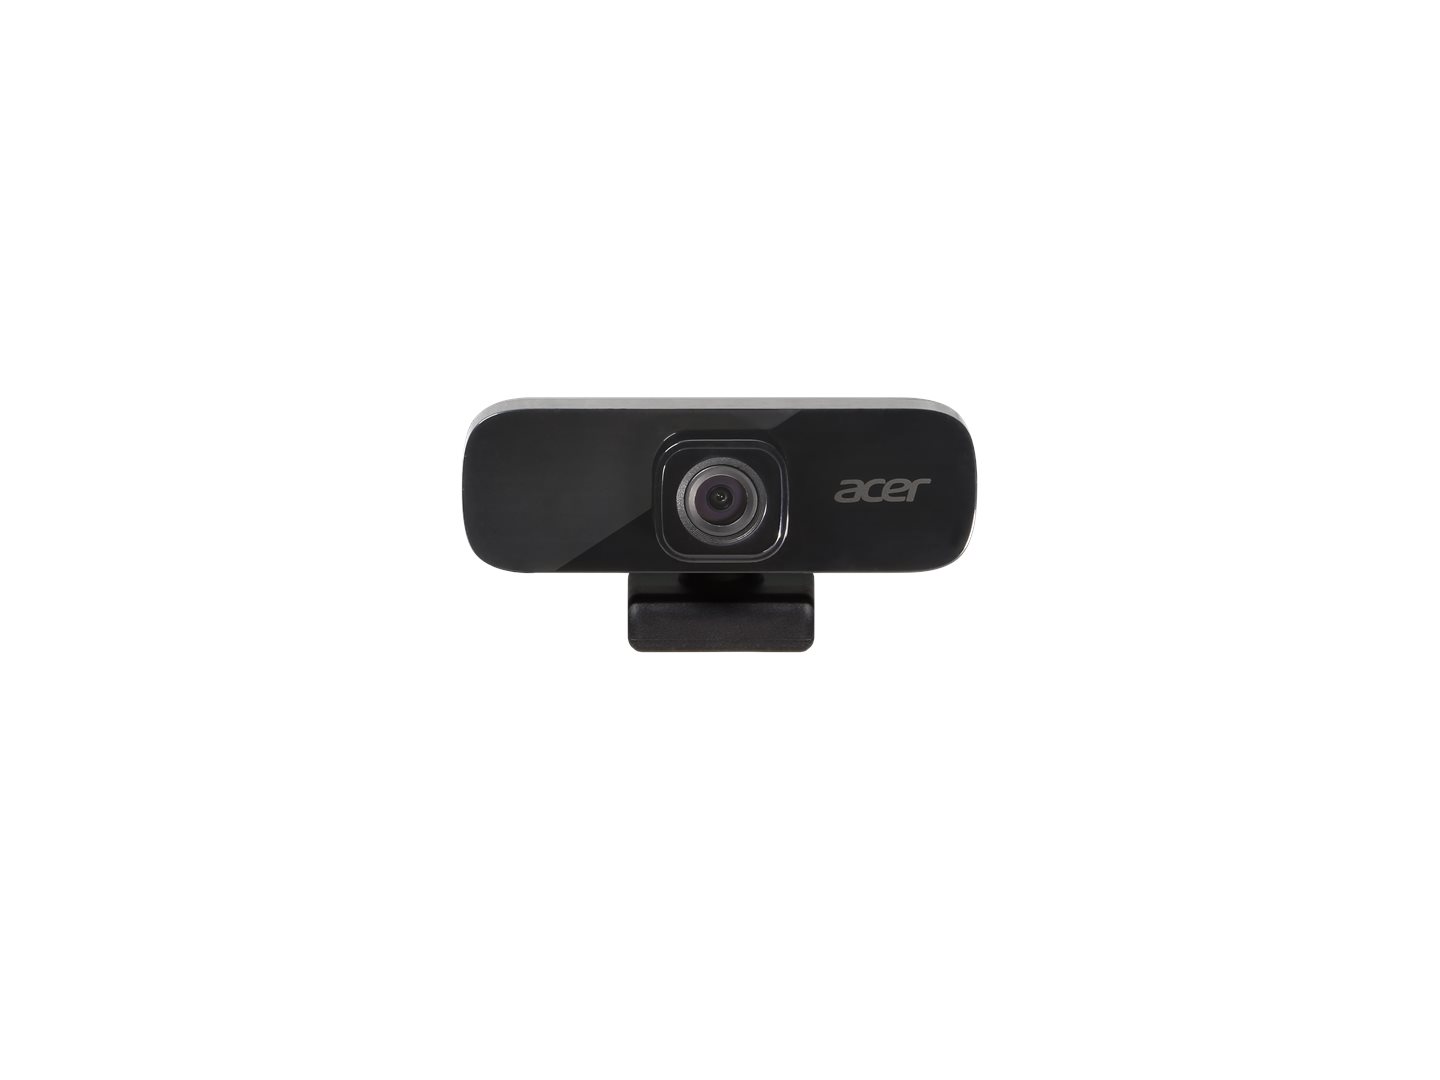 Fotografie Acer QHD Conference Webcam (2560x1440 pixelů), OV5648 5 MP; úhel 70°; F=2.8,USB